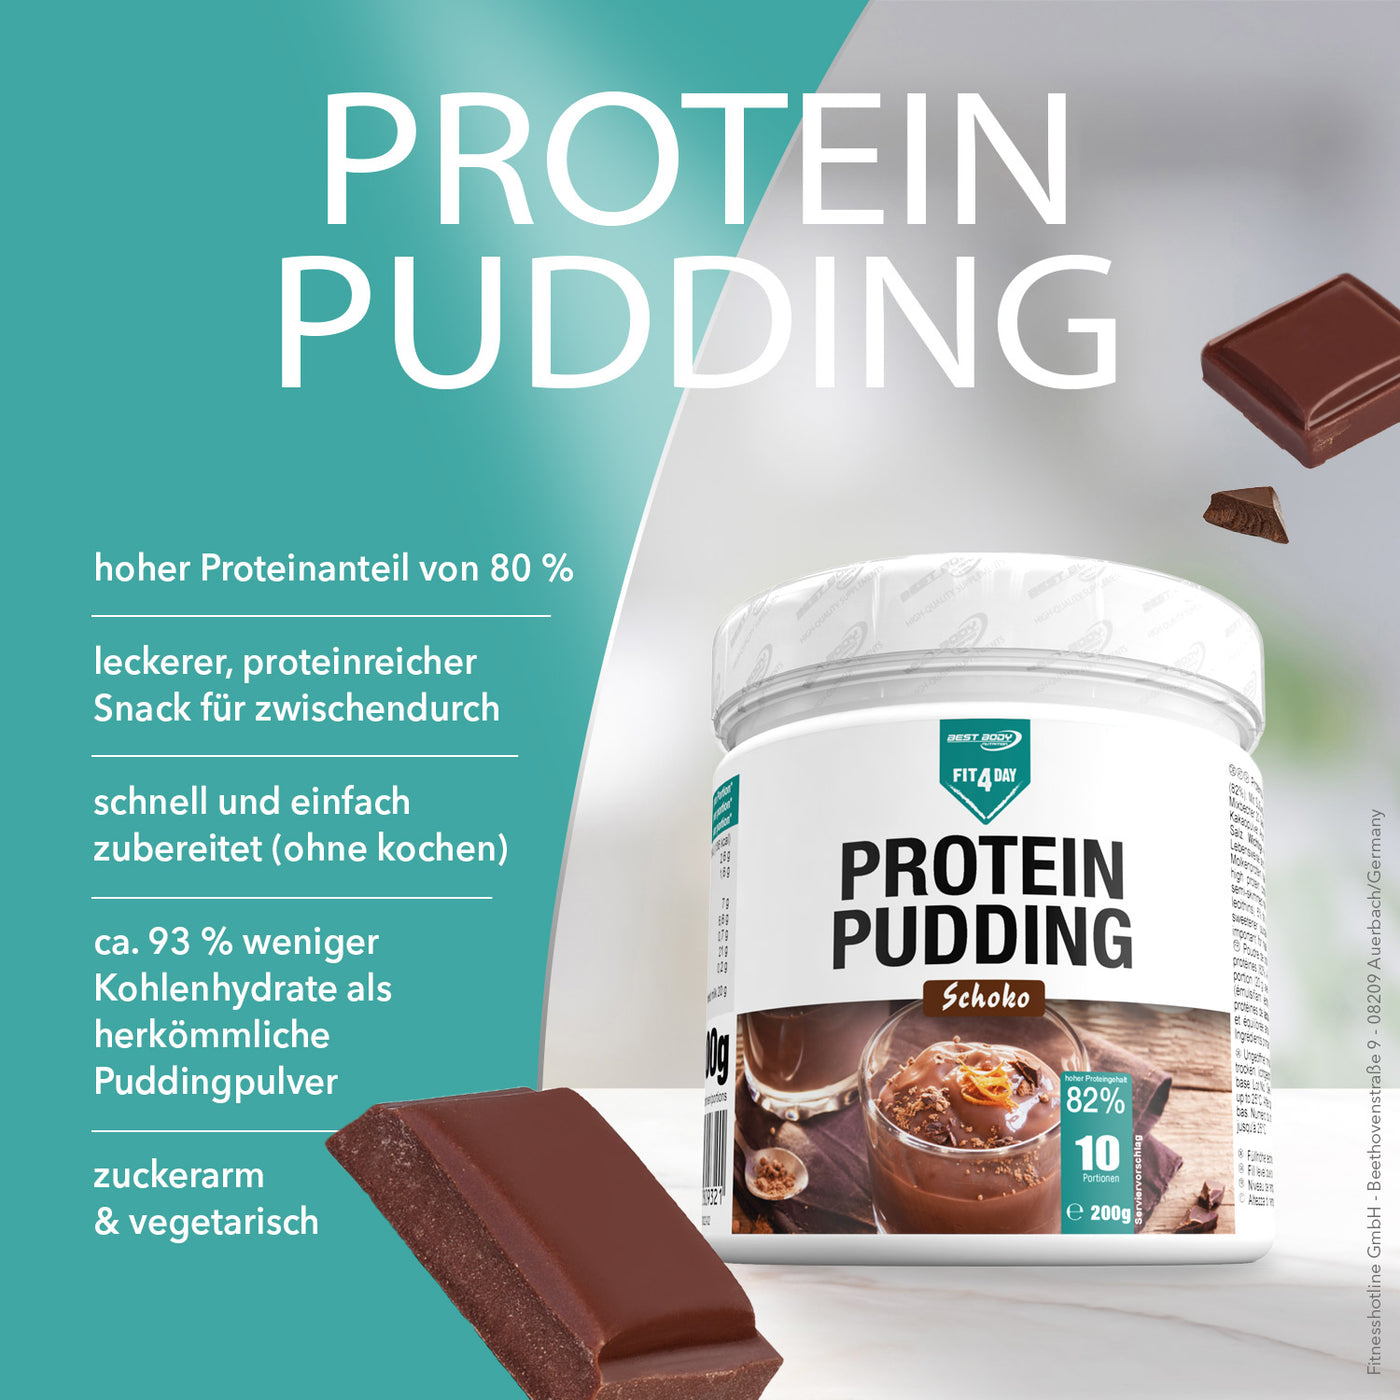 Protein Pudding - Schoko - 200 g Dose#_